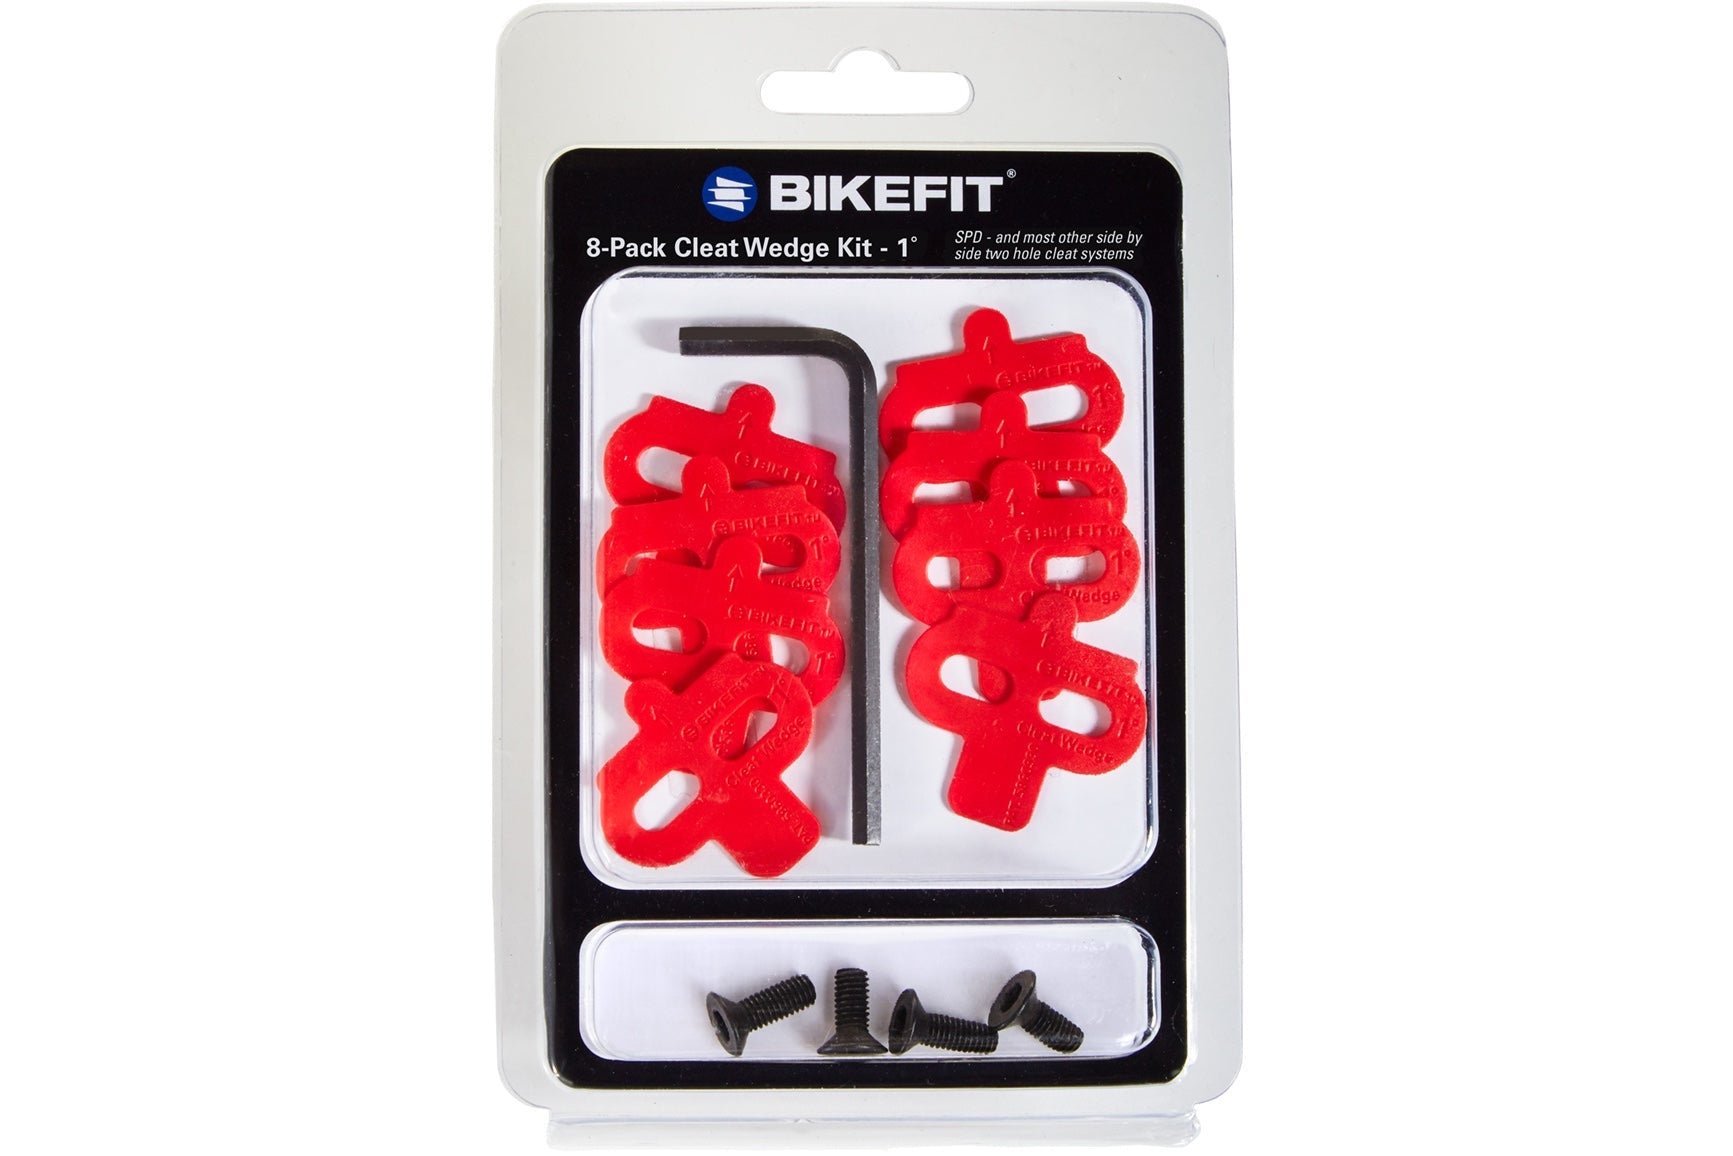 BikeFit Cleat Wedges shown in packaging